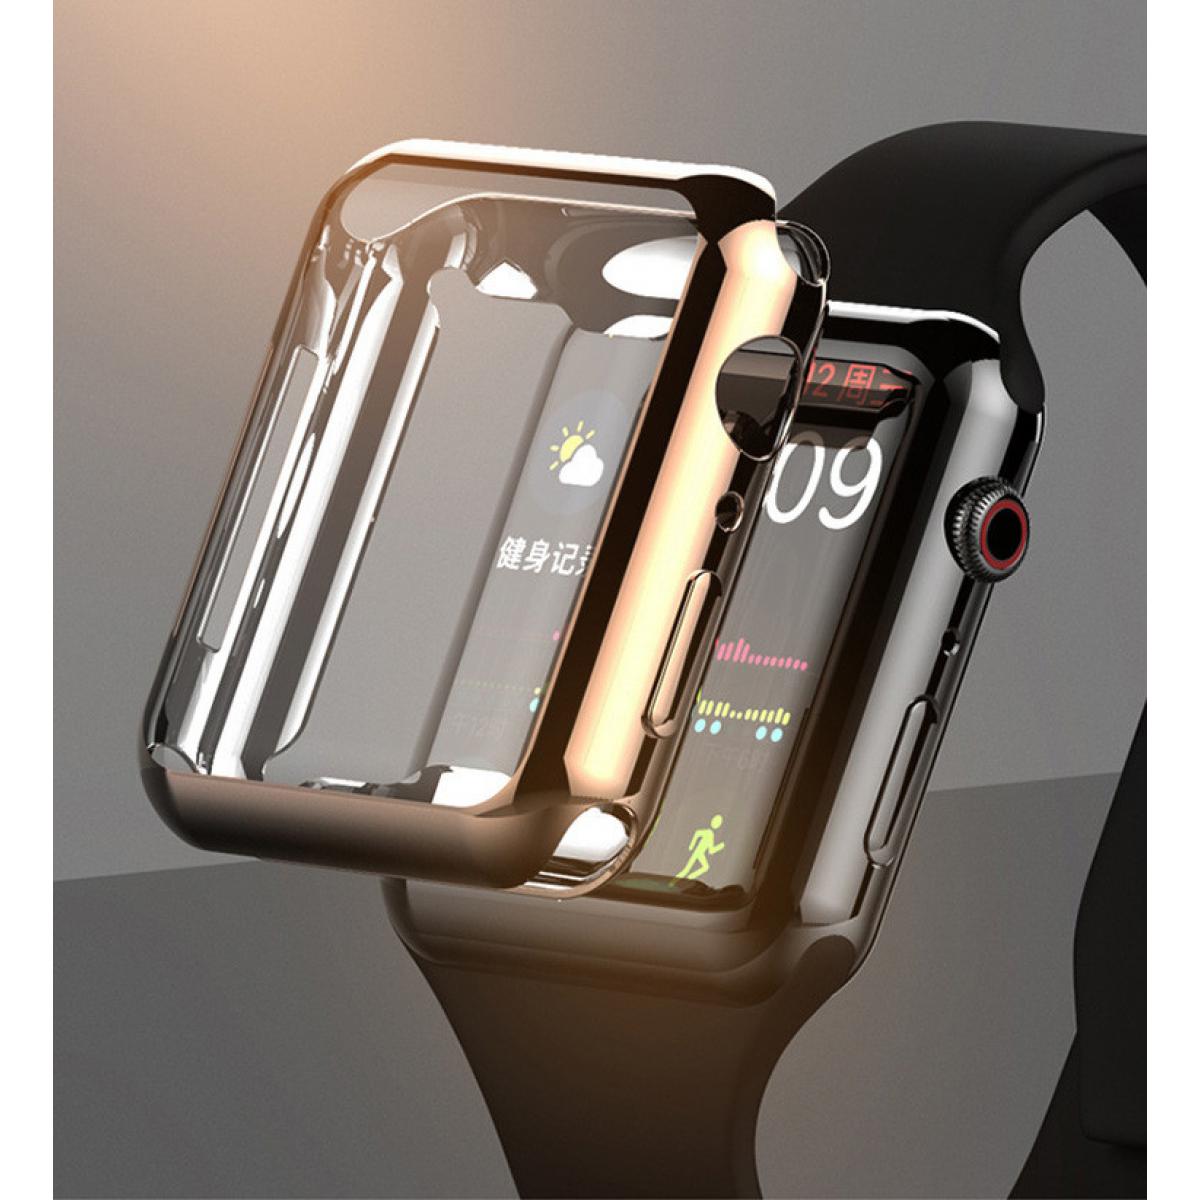 Shot - Coque Silicone 44mm pour IWATCH Serie 3 APPLE Bumper Protection Tactile (OR) - Accessoires montres connectées